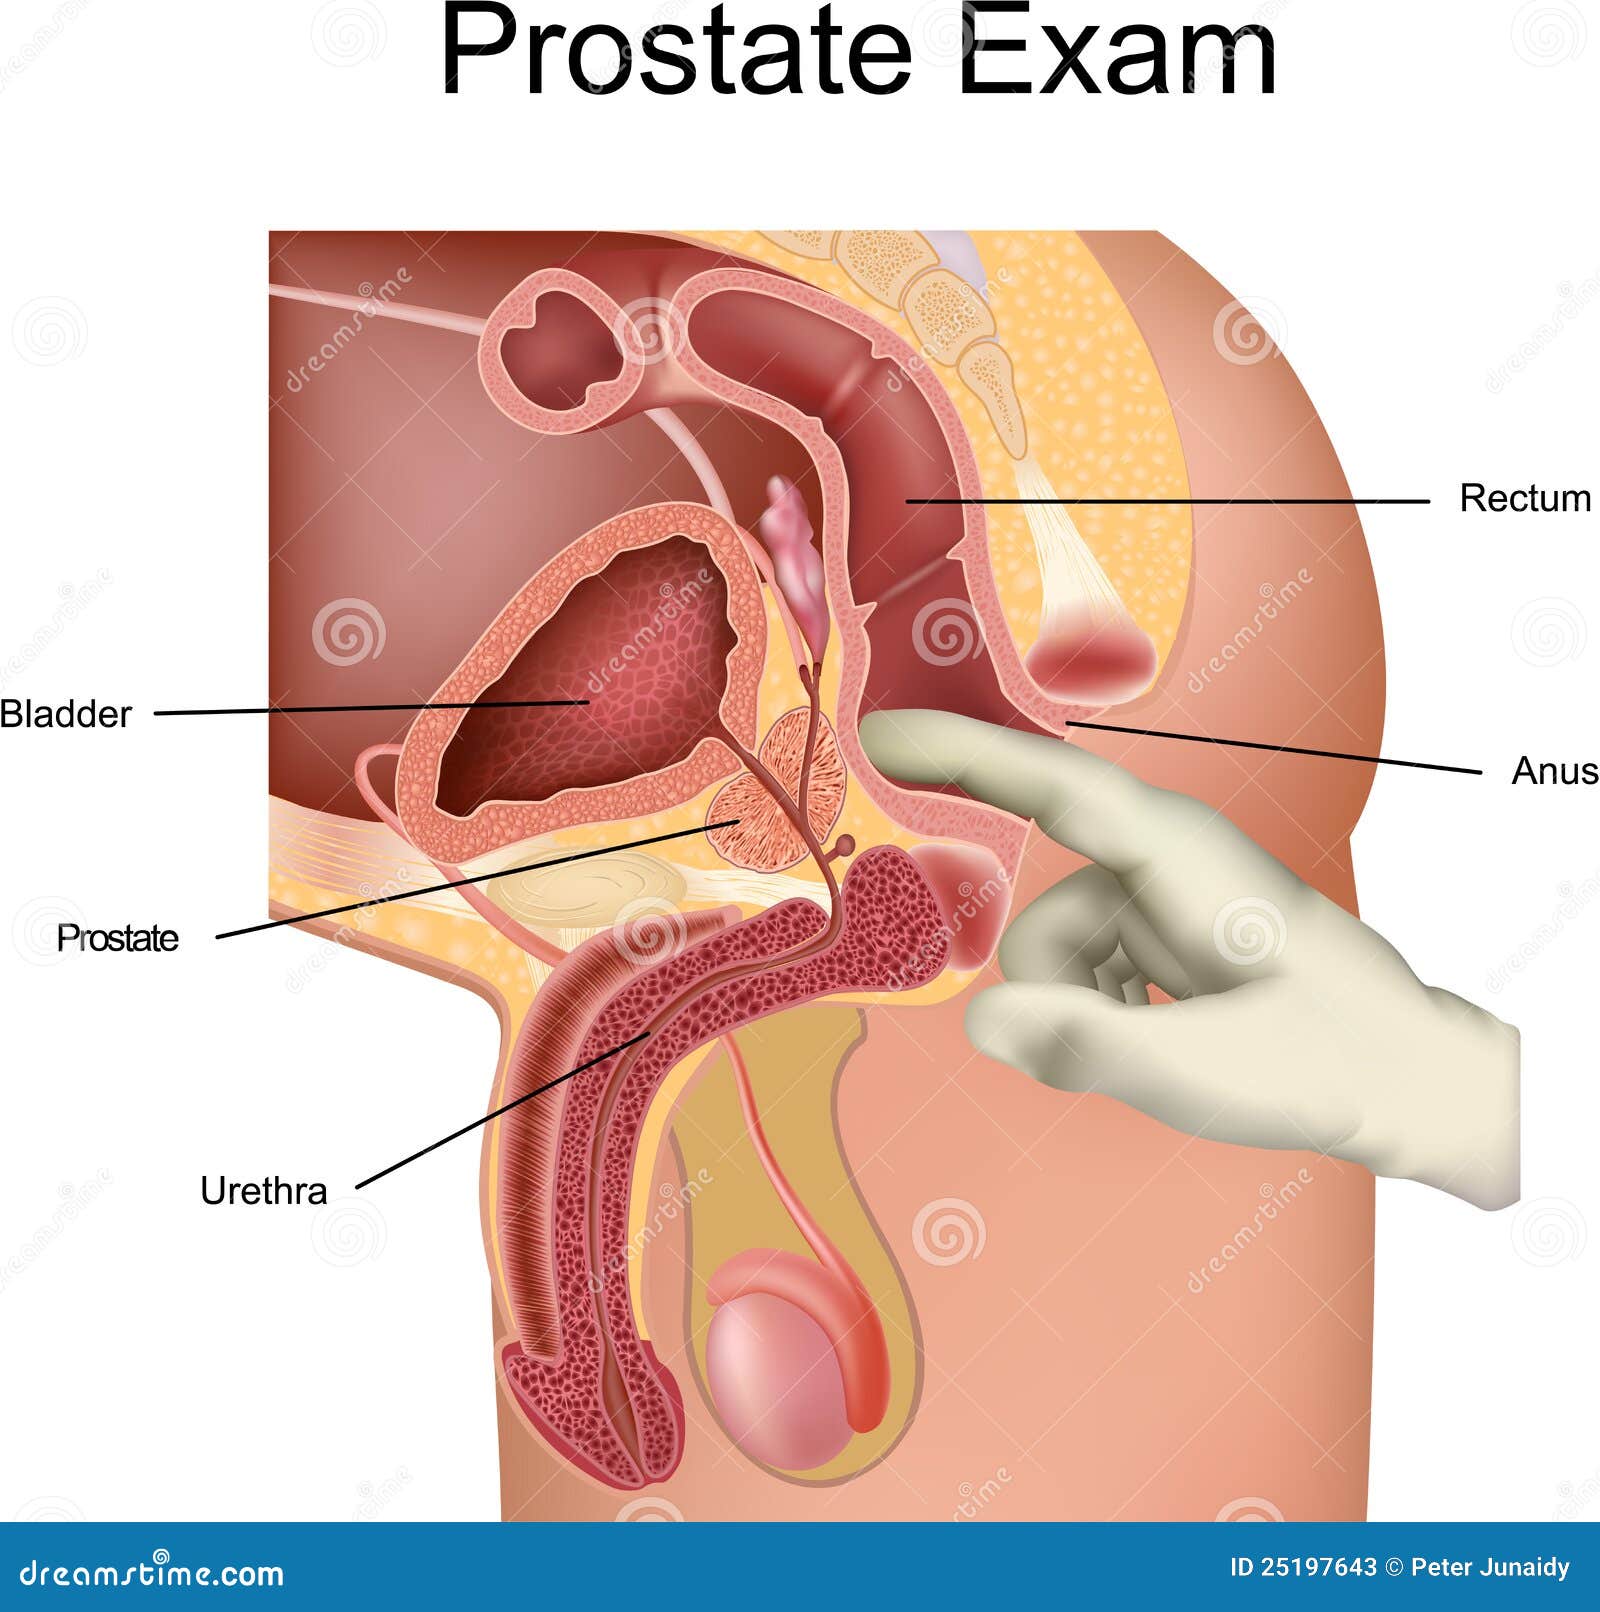 prostate exam)